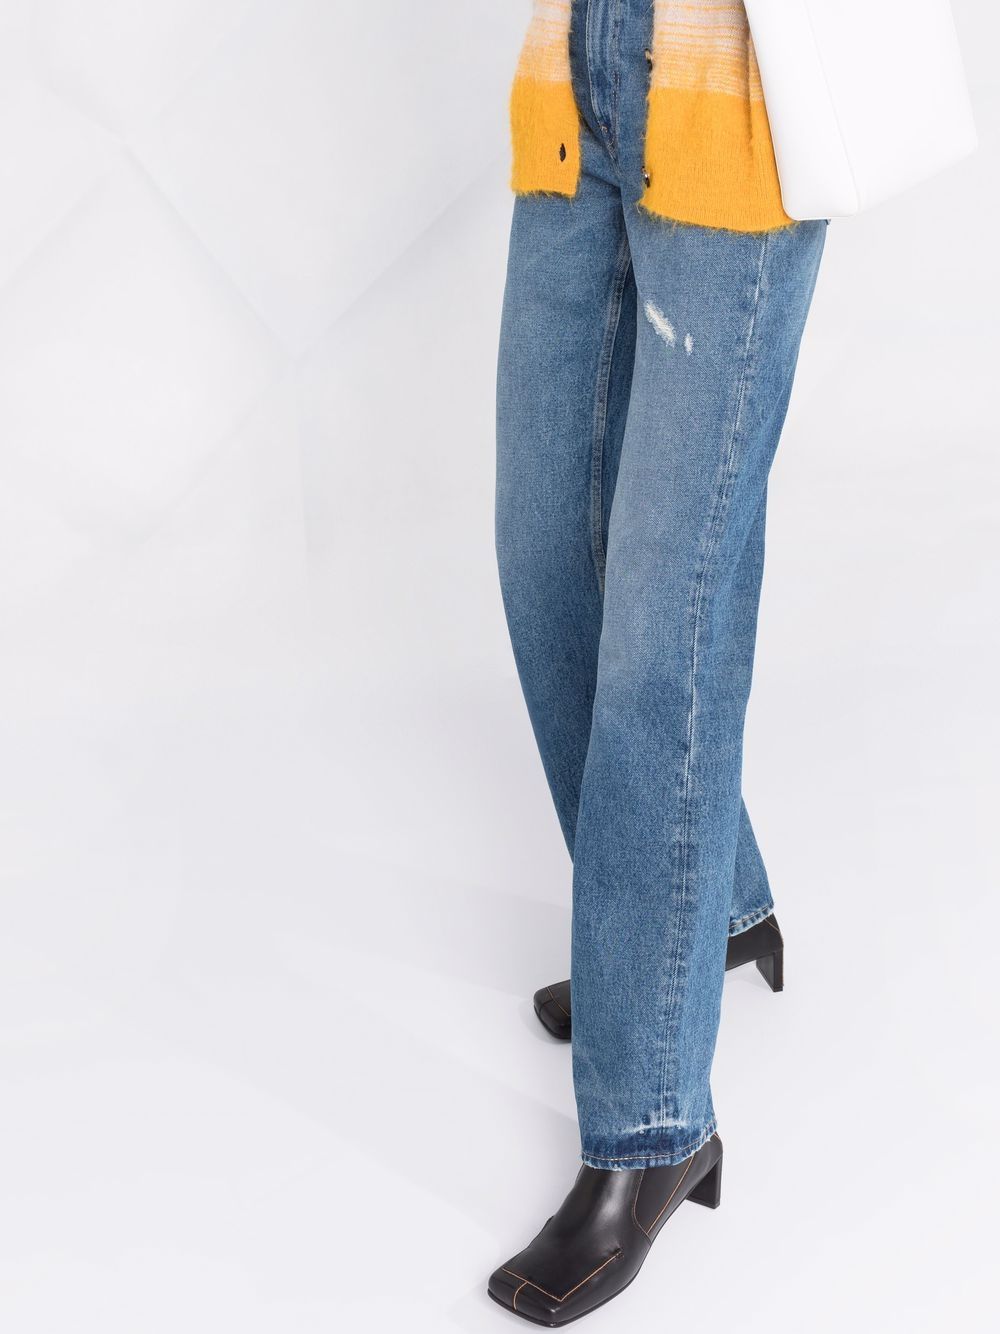 Jeans 1977 regular fit in cotone organico blu sbiadito